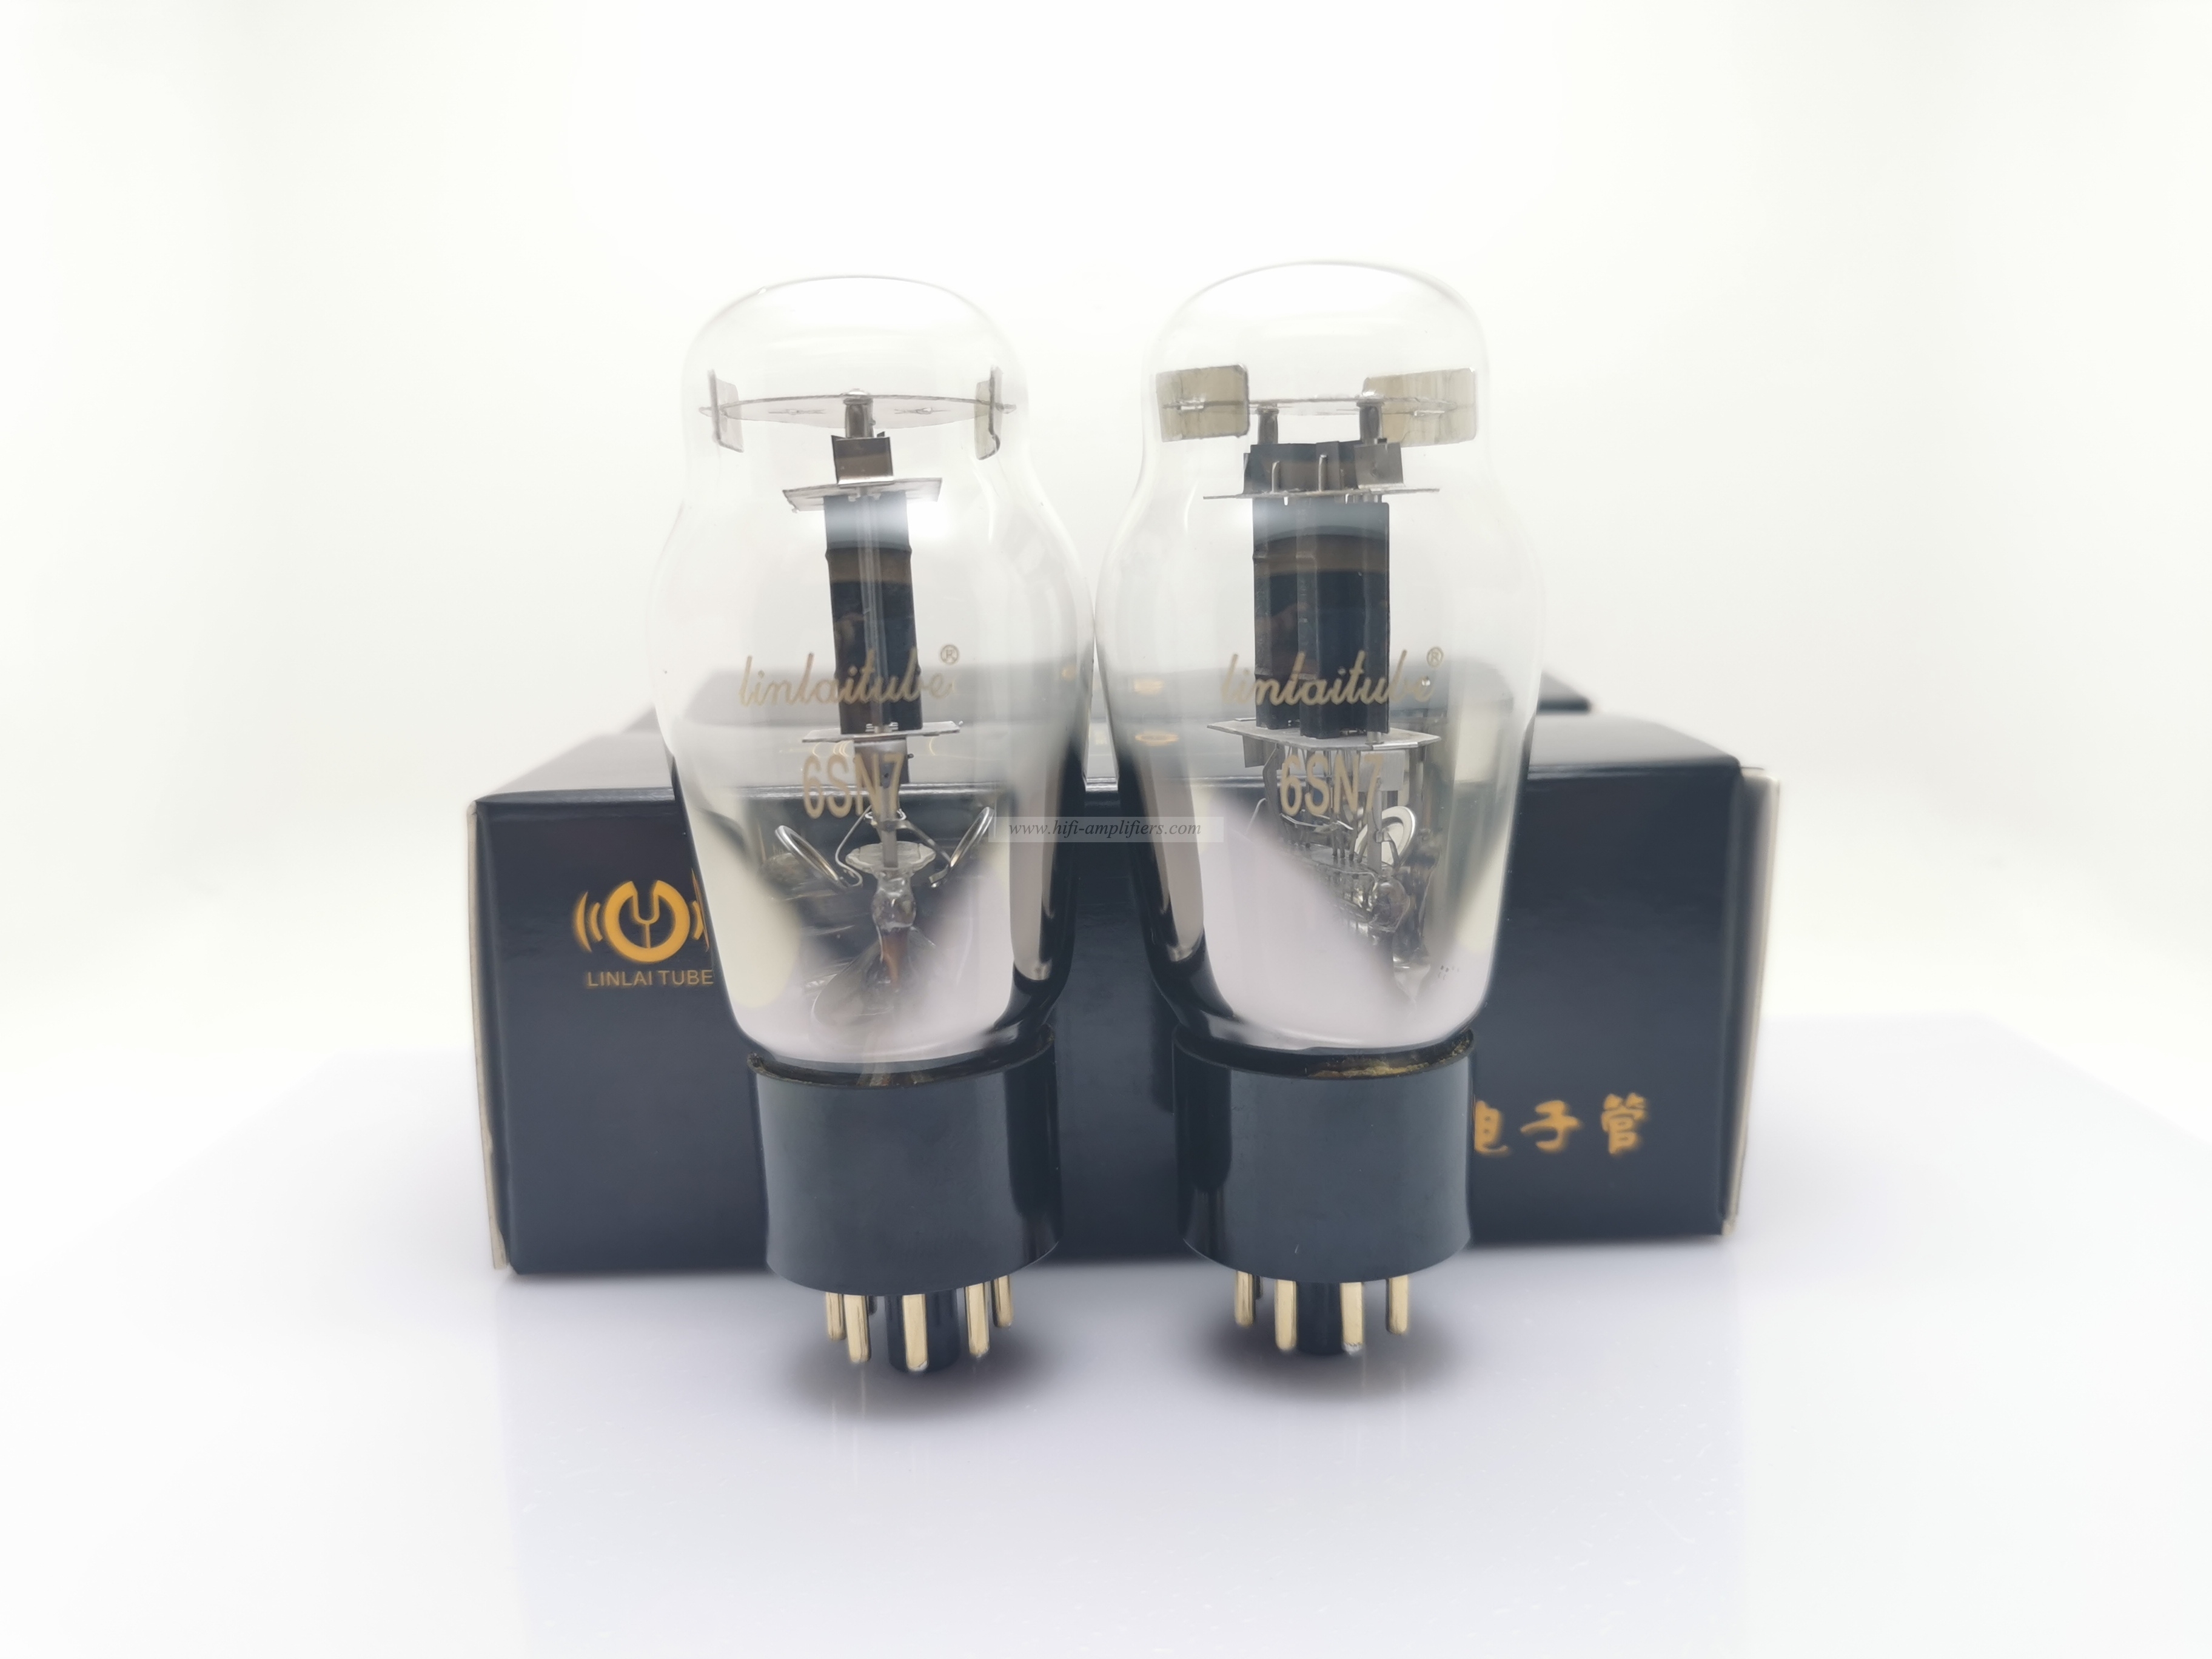 LINLAI 6SN7 Vacuum Tube HIFI Audio Valve Replaces 6H8C/6N8P/CV181 Electronic Tube Matched Pair